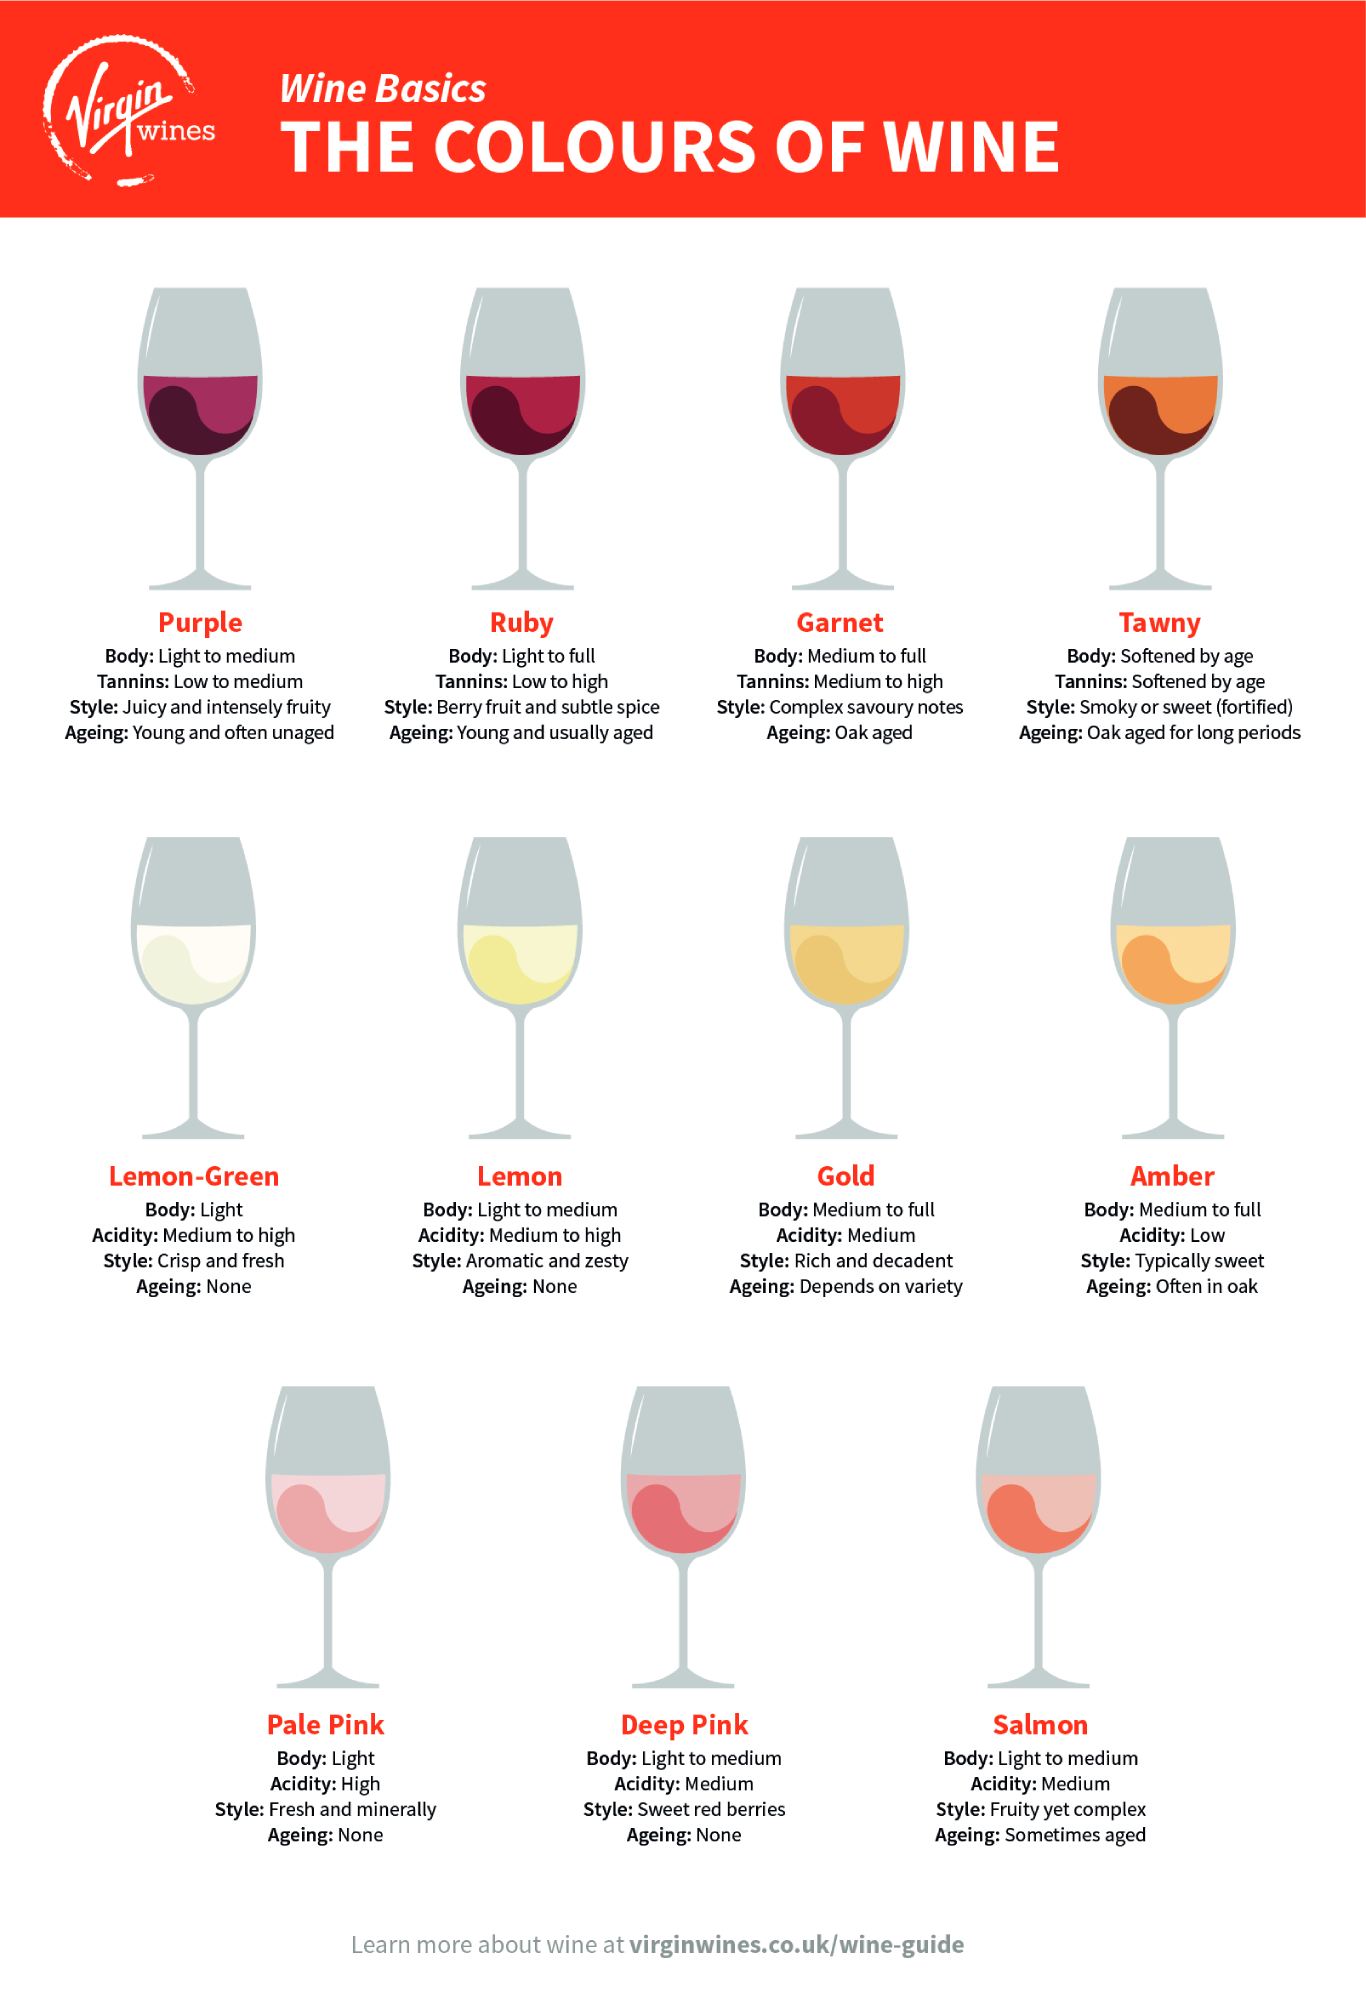 https://www.virginwines.co.uk/hub/wp-content/uploads/2019/12/The-Colours-of-Wine-infographic-by-Virgin-Wines.jpg